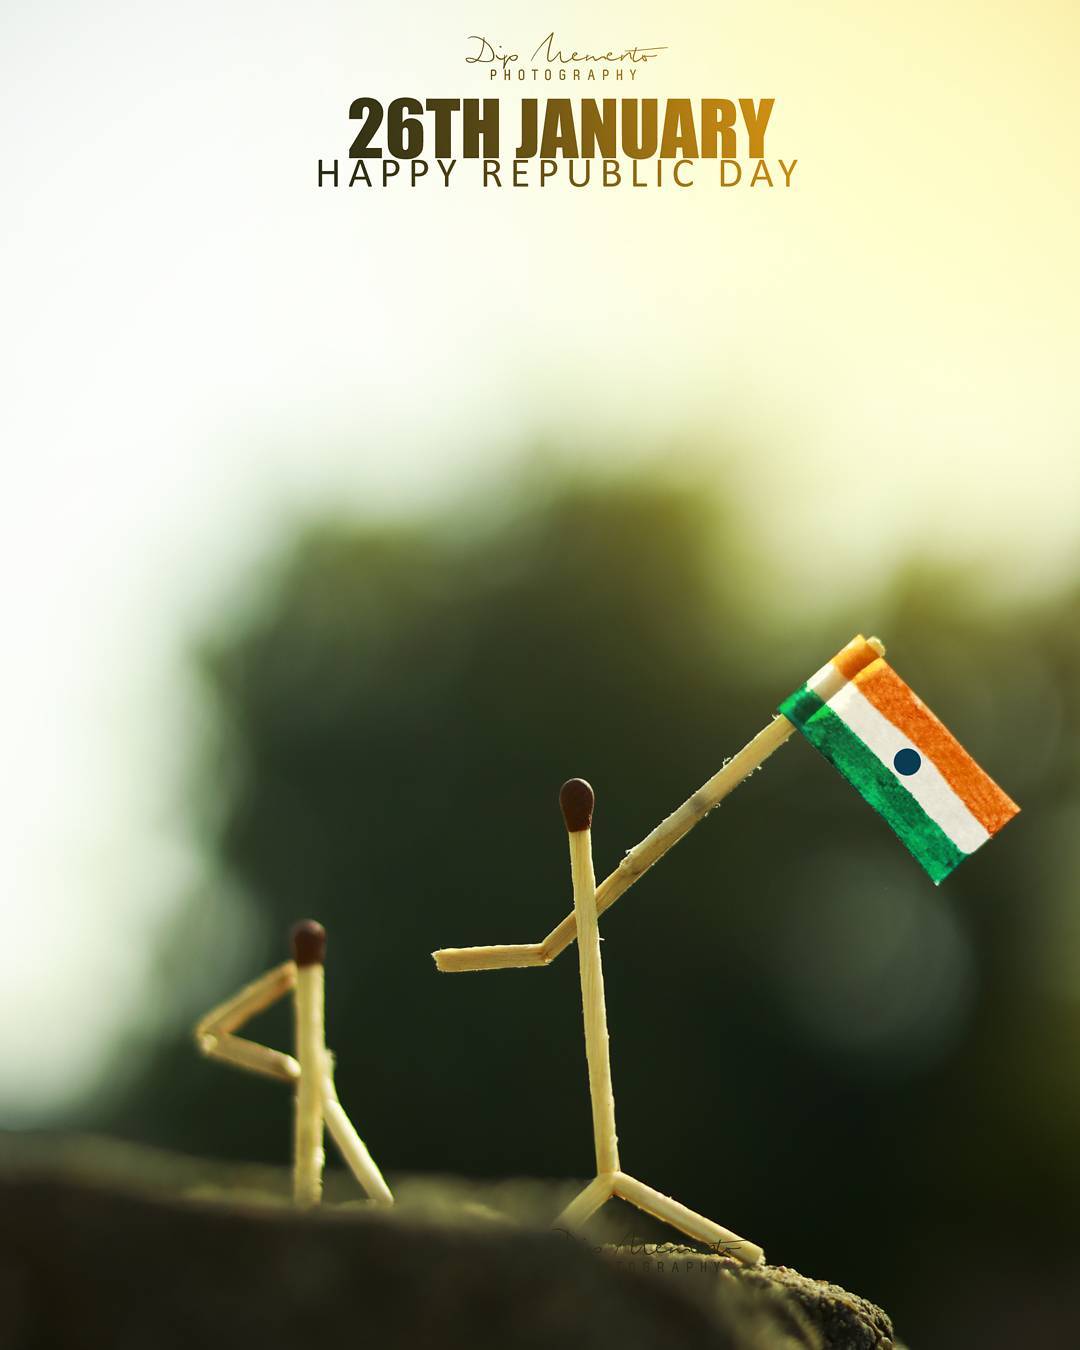 Teach your child to respect Indian flag and india.. Happy #republicday #india .  #dipmementophotography 
#phodus #phodus_competetion #mypixeldiary #i_hobbygraphy #dslrofficial #photographers_of_india #tists #indiaclicks #tales_of_india #ig_colors #desi_diaries #agamesoftones #storiesofindia #streetphotography #creativeimagemagazine #shutterhubindia #indianphotographyclub #trellingdelhi #photo_pond #monochromeindia #india_ig #_instaindia_ #igindiaview #iop #streetphotographydelhi
.
@photographers.of.india @colours.of.india @dslrofficial @india_undiscovered @__indian_photography__ @photographers_of_india @hindustan.pictures @the.anonymous.photographers @india_everyday @canon_photos @indian.hobbygraphy @india_gram @adobe @streetphotofactory @phodus_competition @dpeginsta @igindiaview @igvisualcaptures @indian_clickers_ @indianshutterbugs @indiashutterbugs @galiphotography_ @photofieteam @delhiwale @travel.real.india @monochromeindia @naturephotography.india @photofieteam @cloud_ig @indiaview @delhihai @india.clicks @official_photography_hub @trellingdelhi @agameoftones @photographers__of__india @lonelyplanetindia @imperial.india @click.ig @dslr_photographers @talent_wall @jmu_talent_destination @natgeocreative @creativeimagemagazineo @iop_delhi @photo_pond @talent_of_india @talent_wall #doicontest17